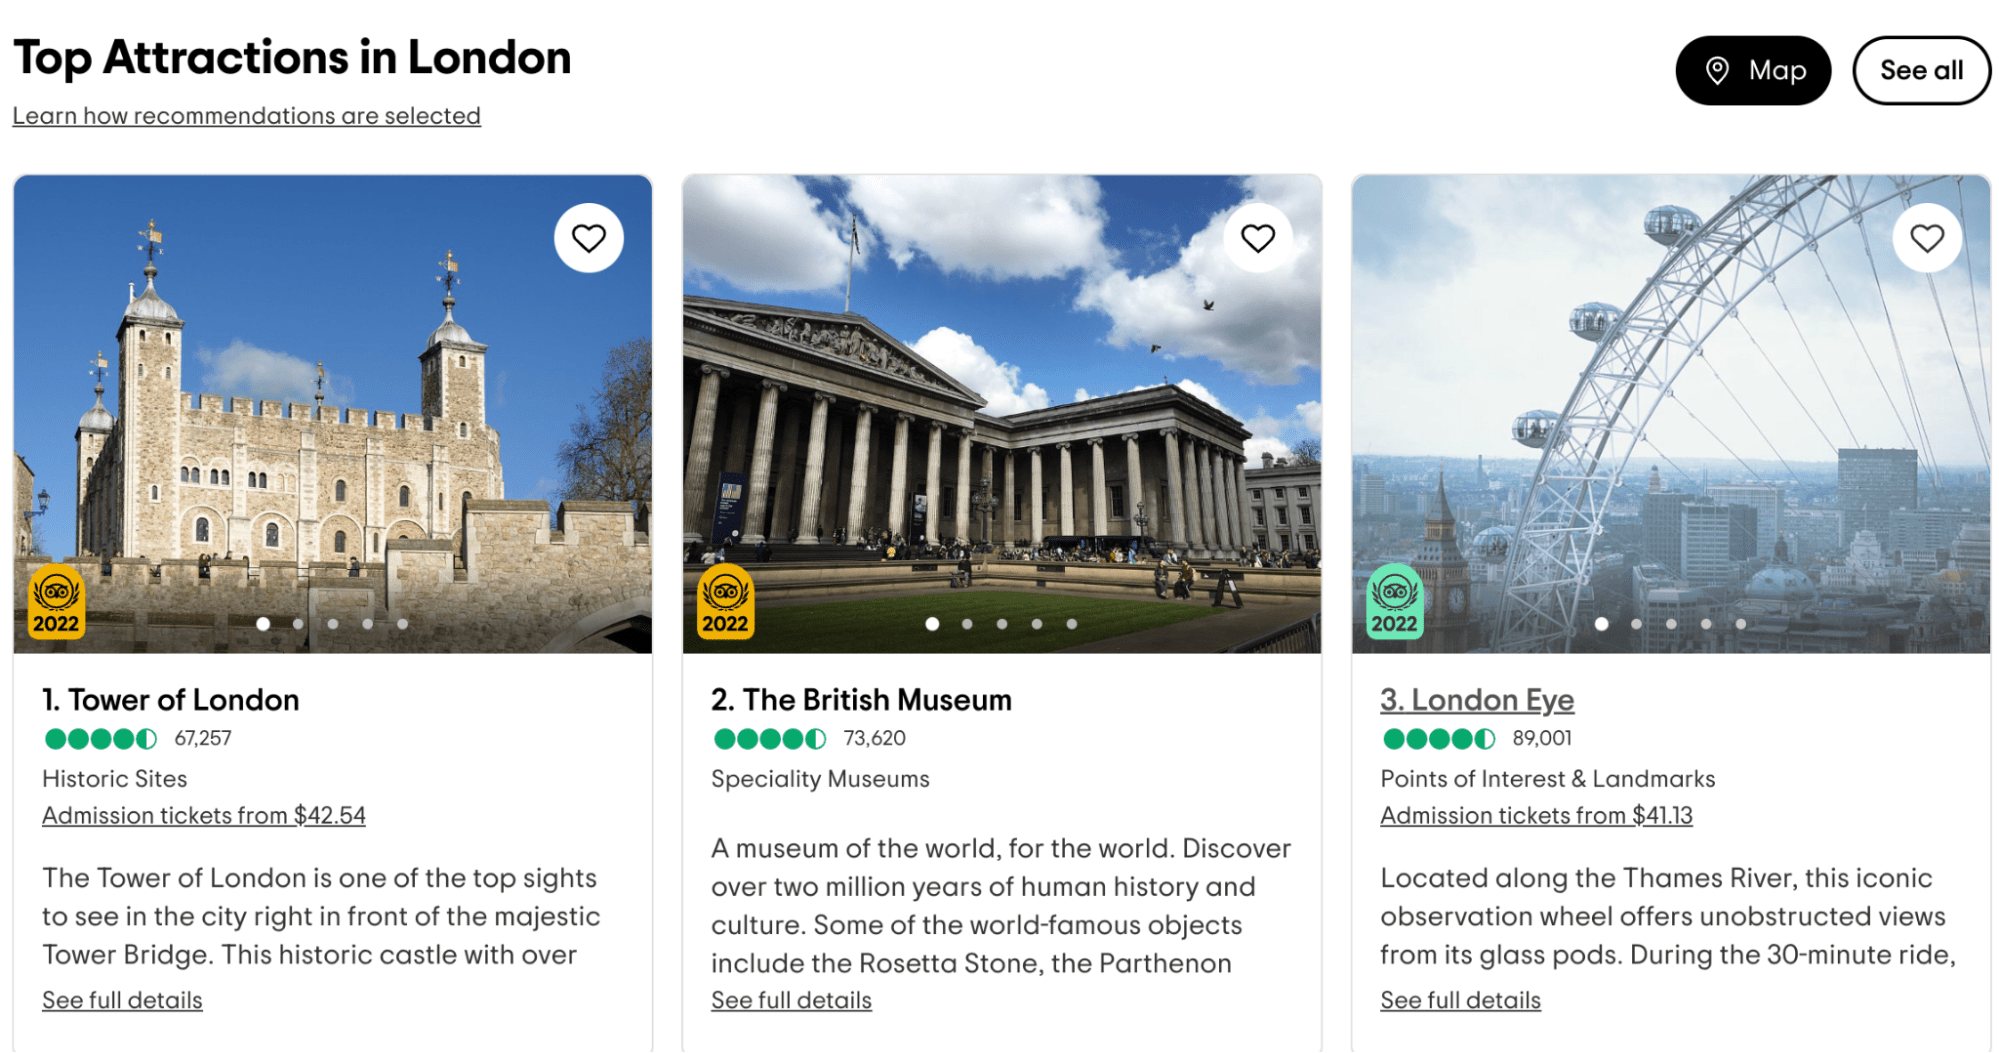 Top attractions in London, via Tripadvisor
